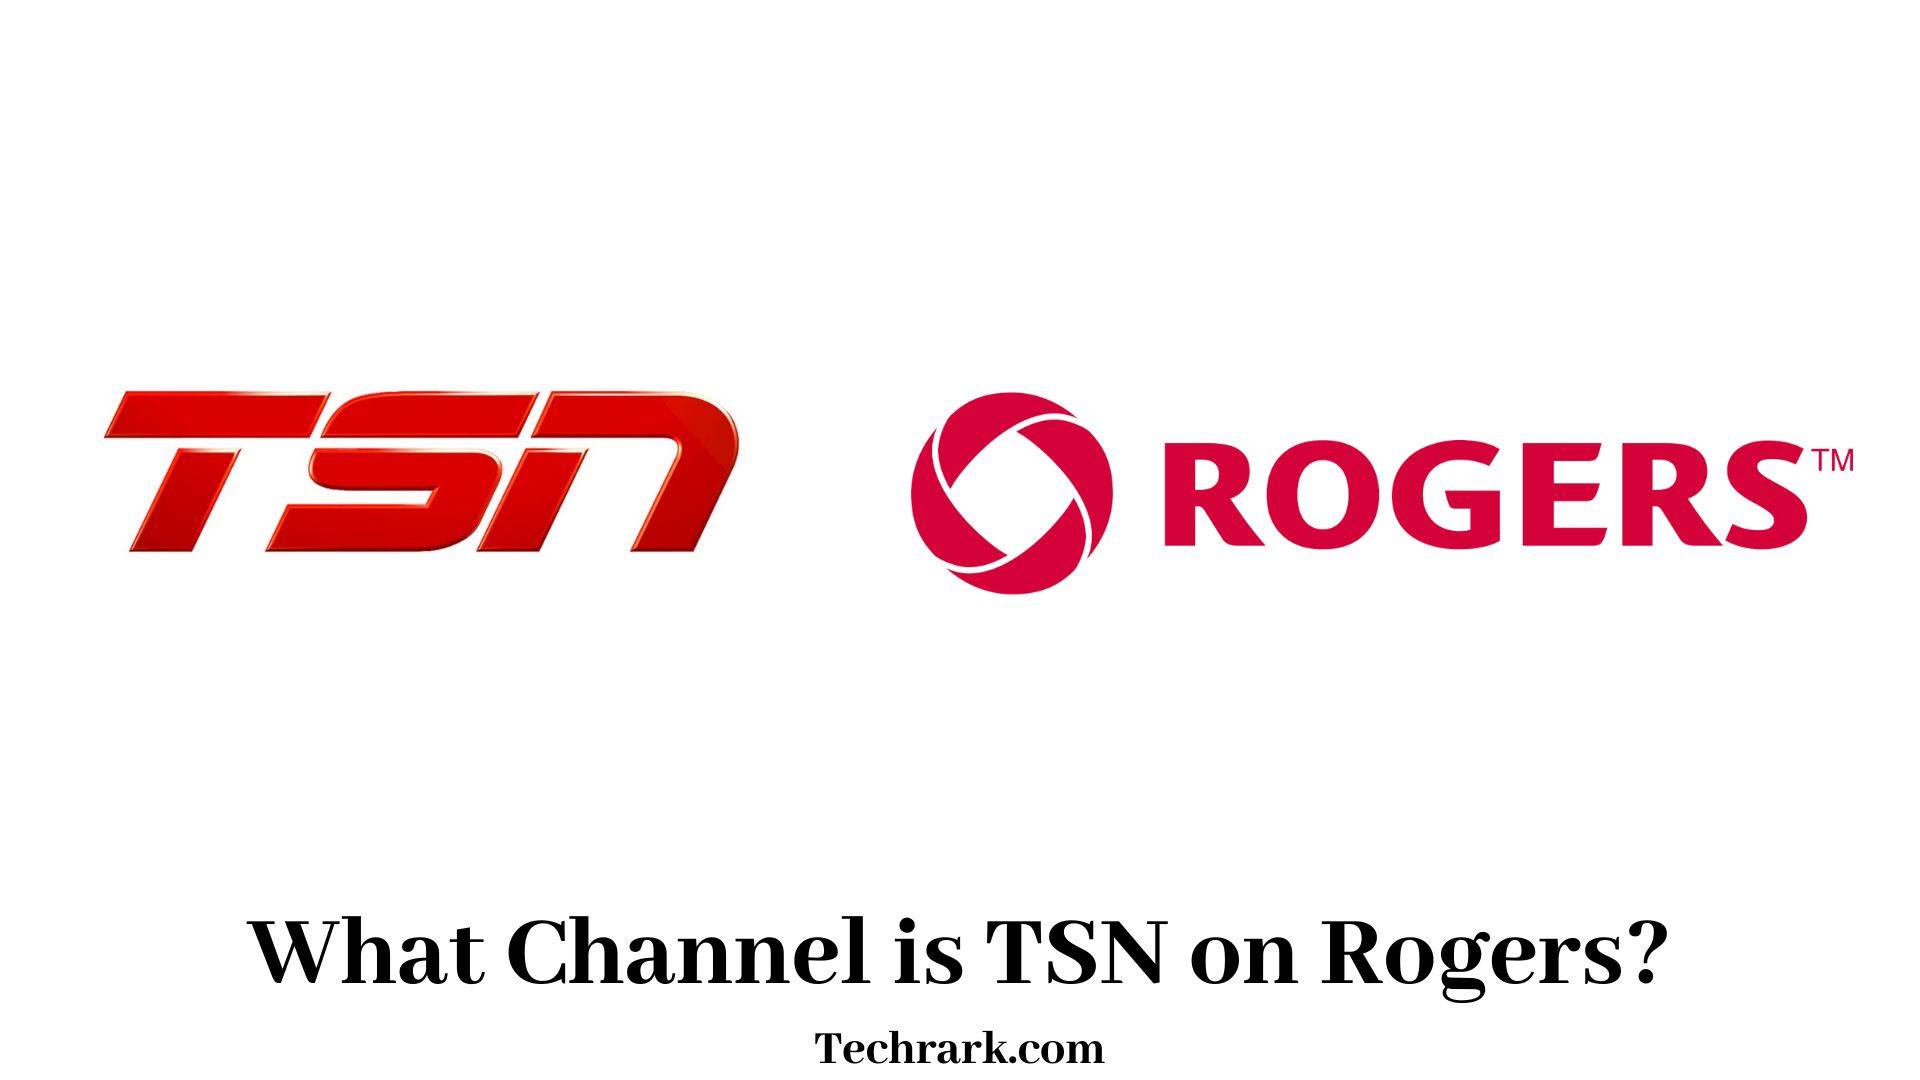 What Channel is TSN on Rogers